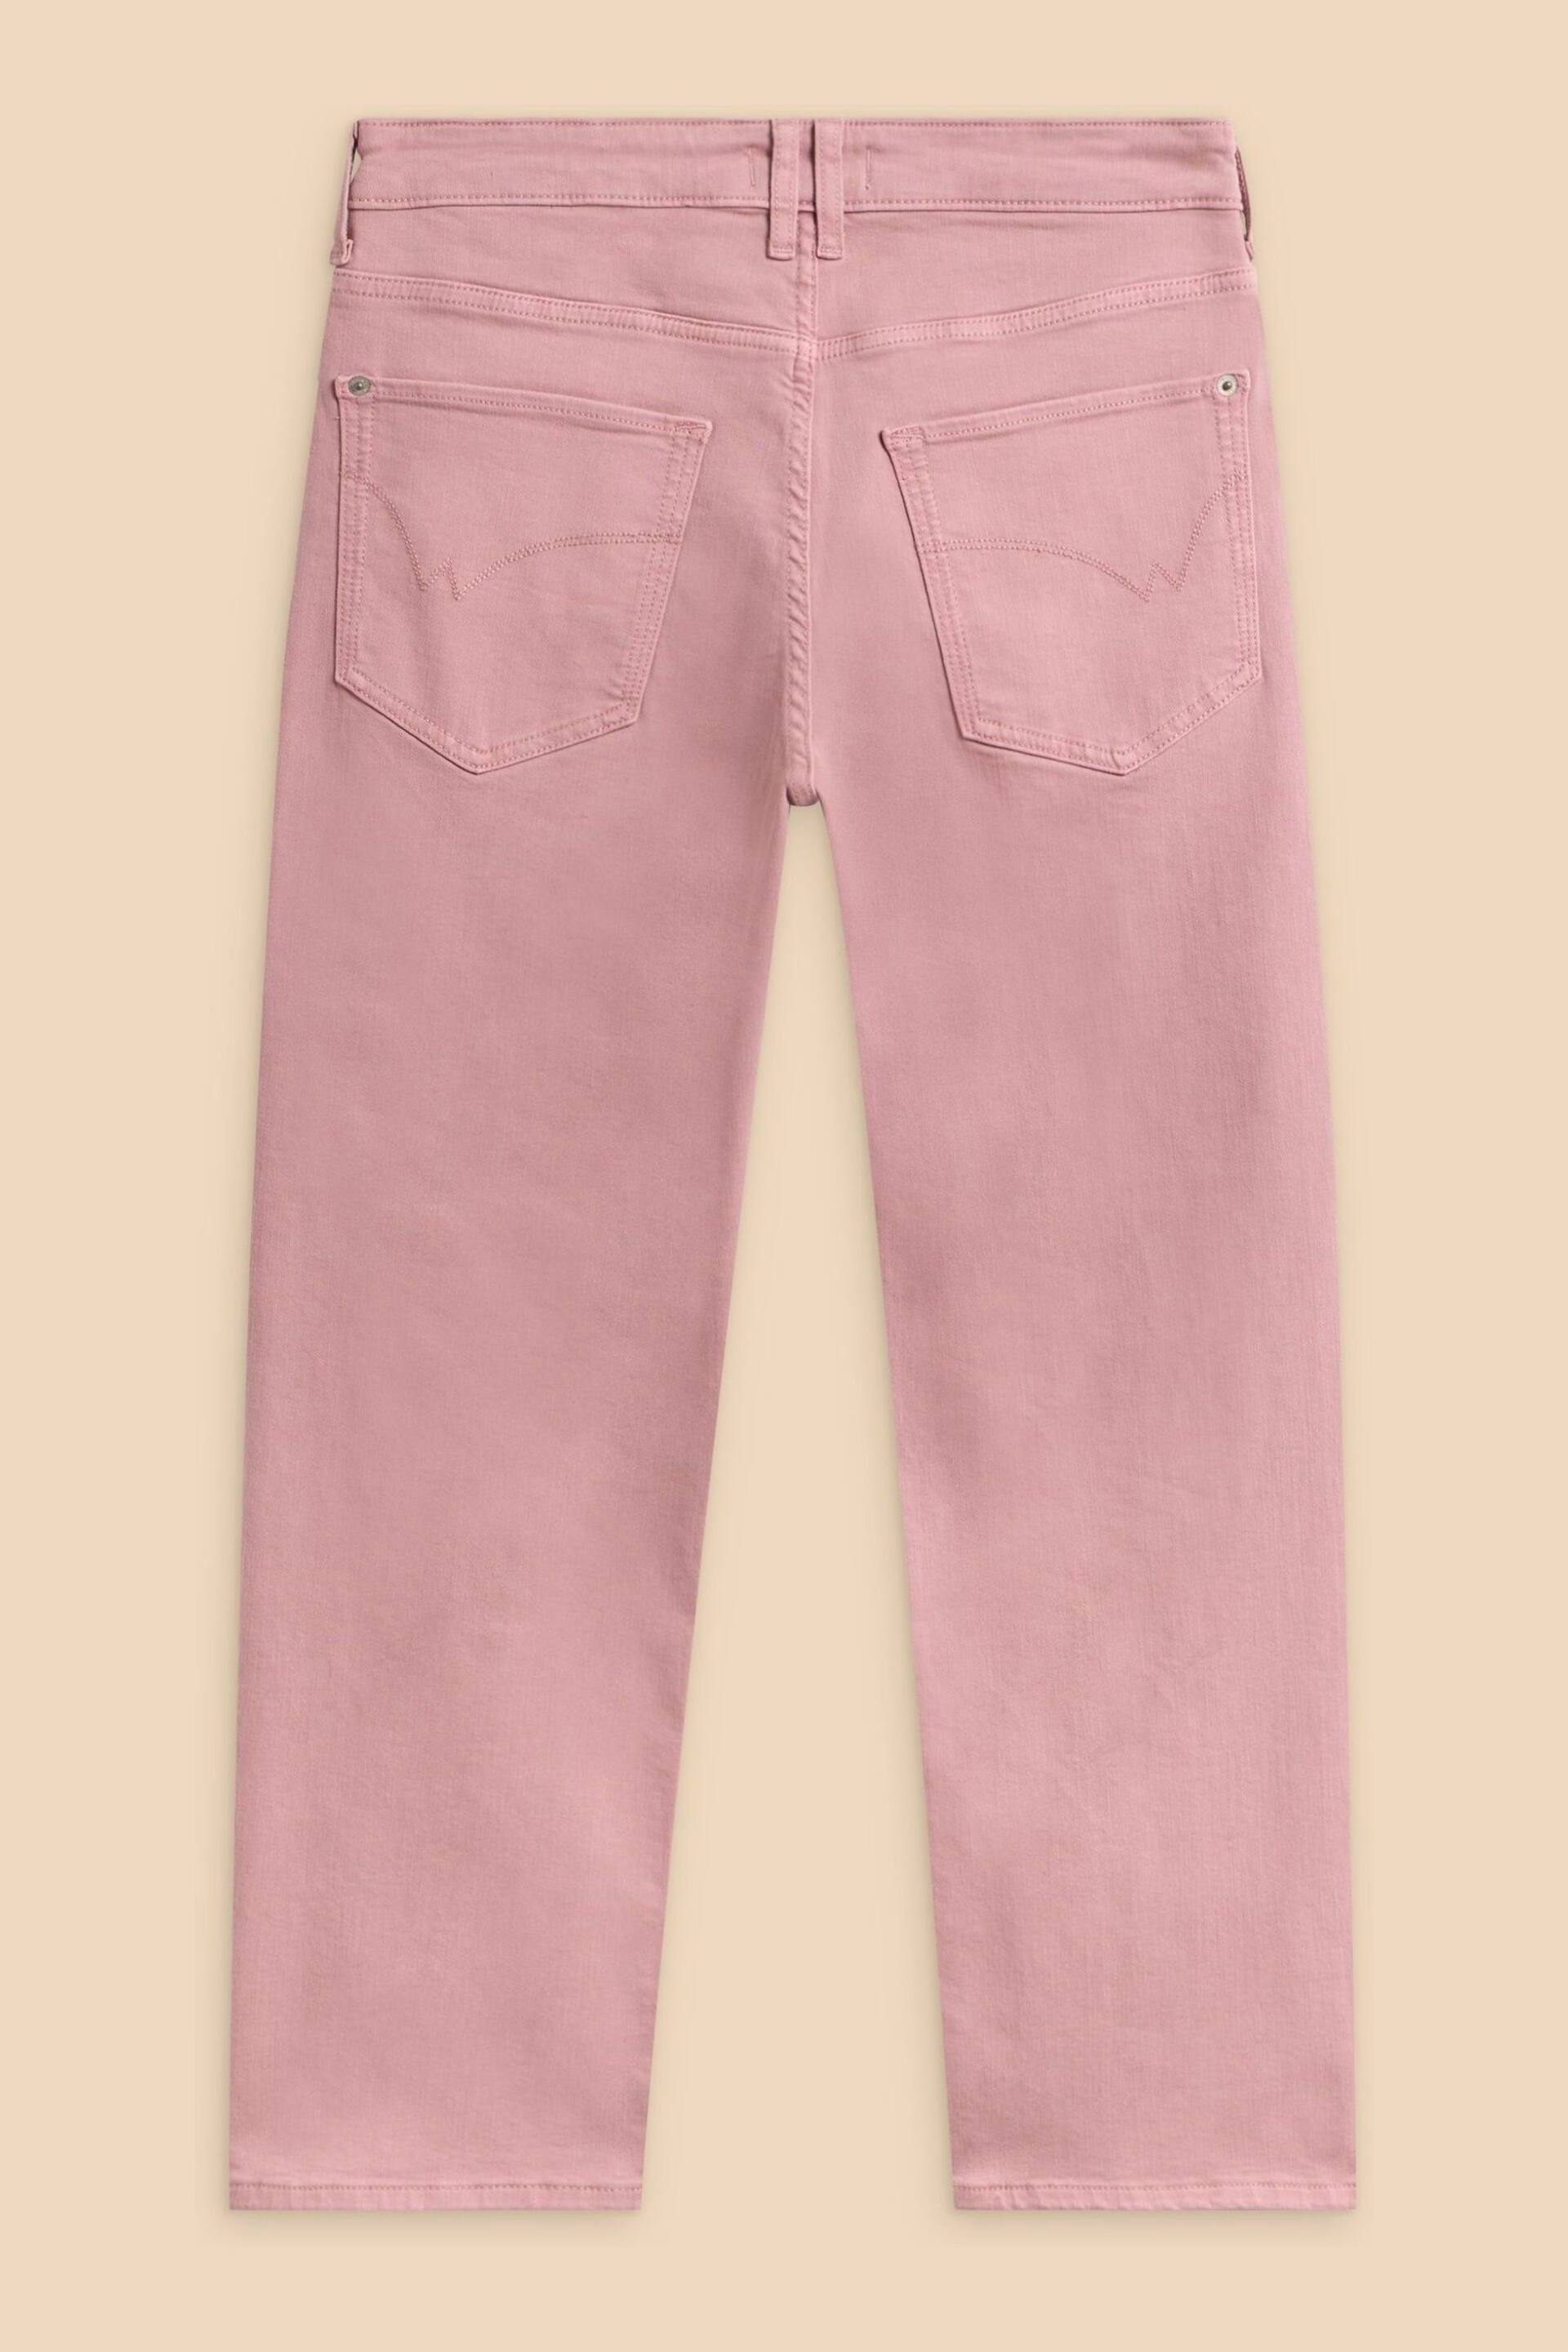 White Stuff Pink Blake Straight Crop Jeans - Image 6 of 7